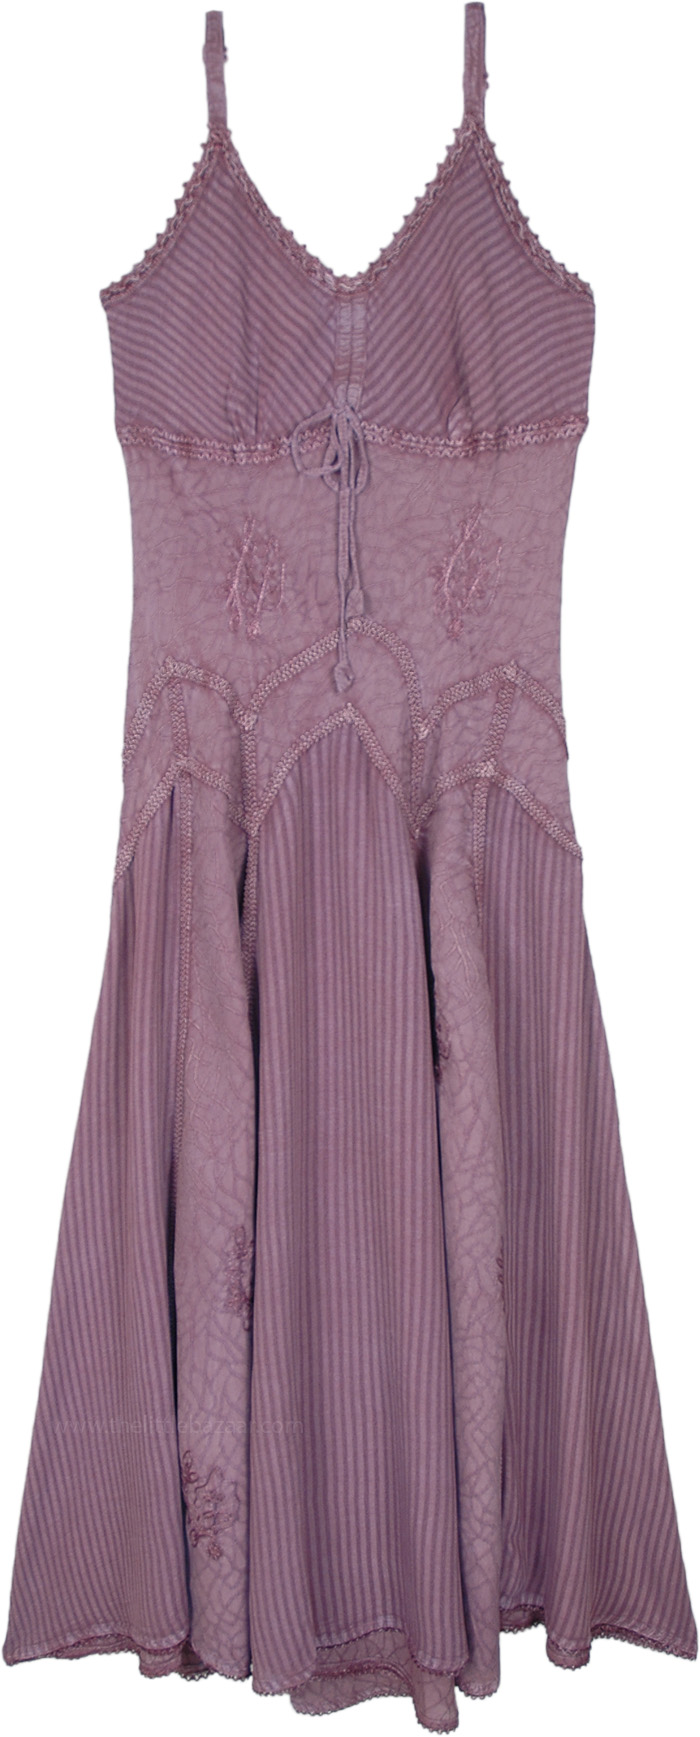 Lilac Renaissance Sleeveless Maxi Dress